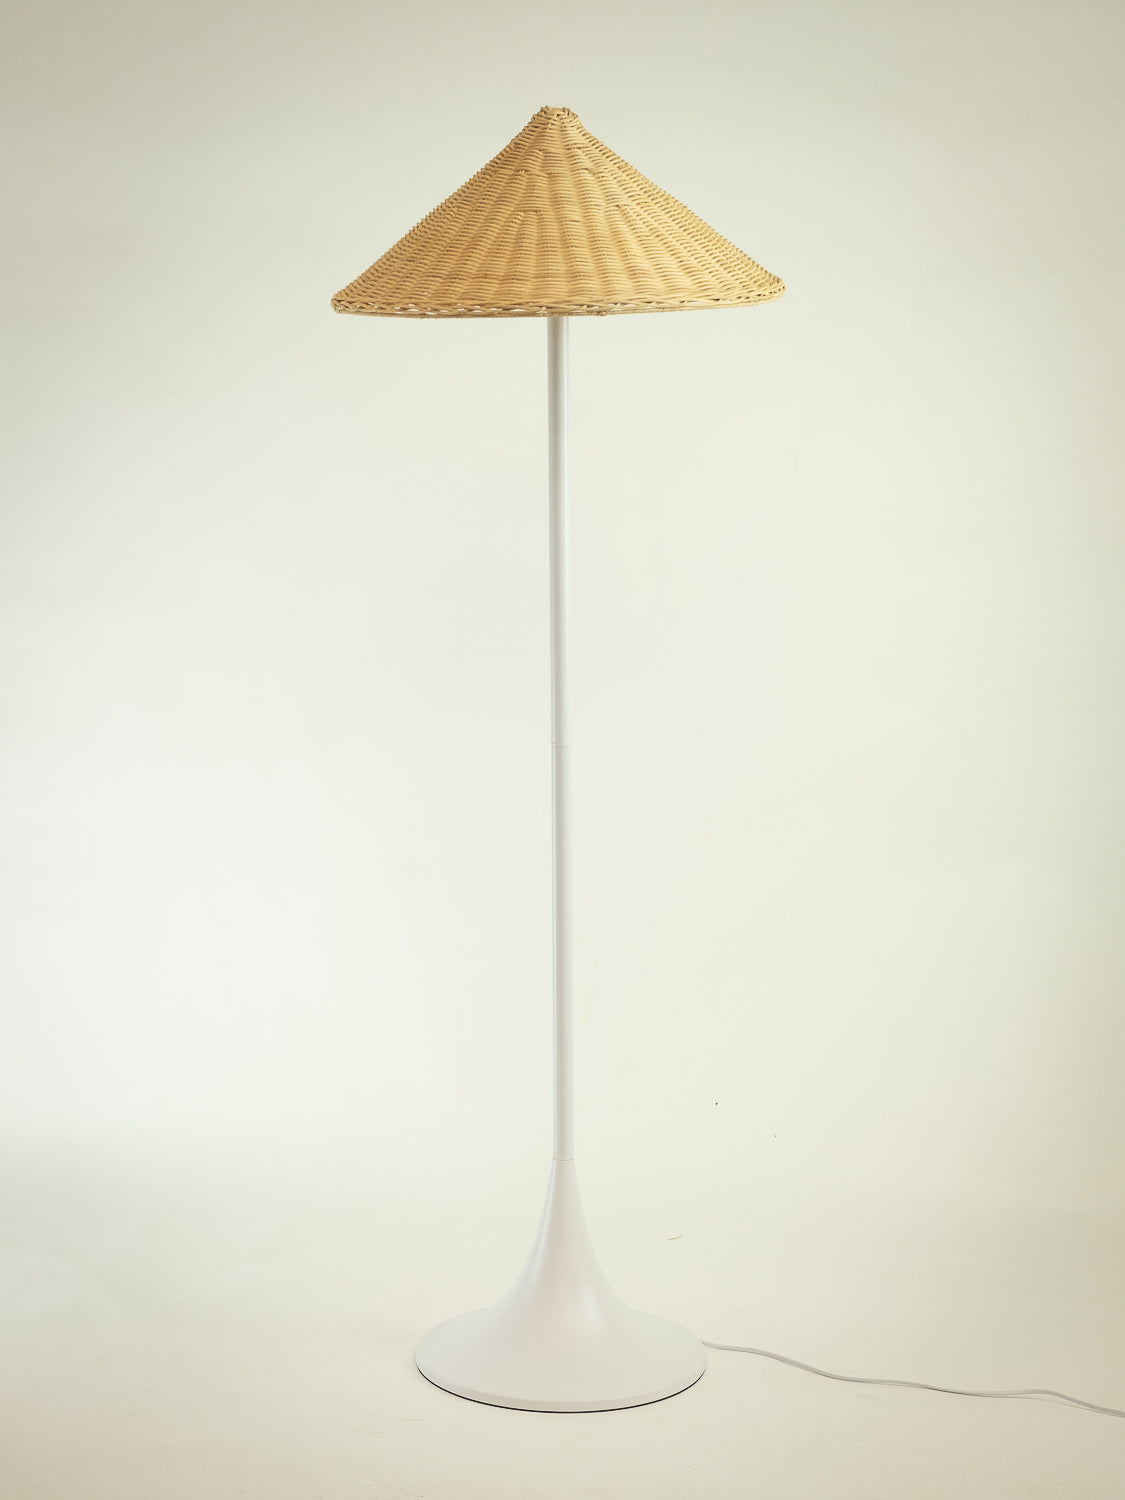 Rattan - Paris Lamp Shade